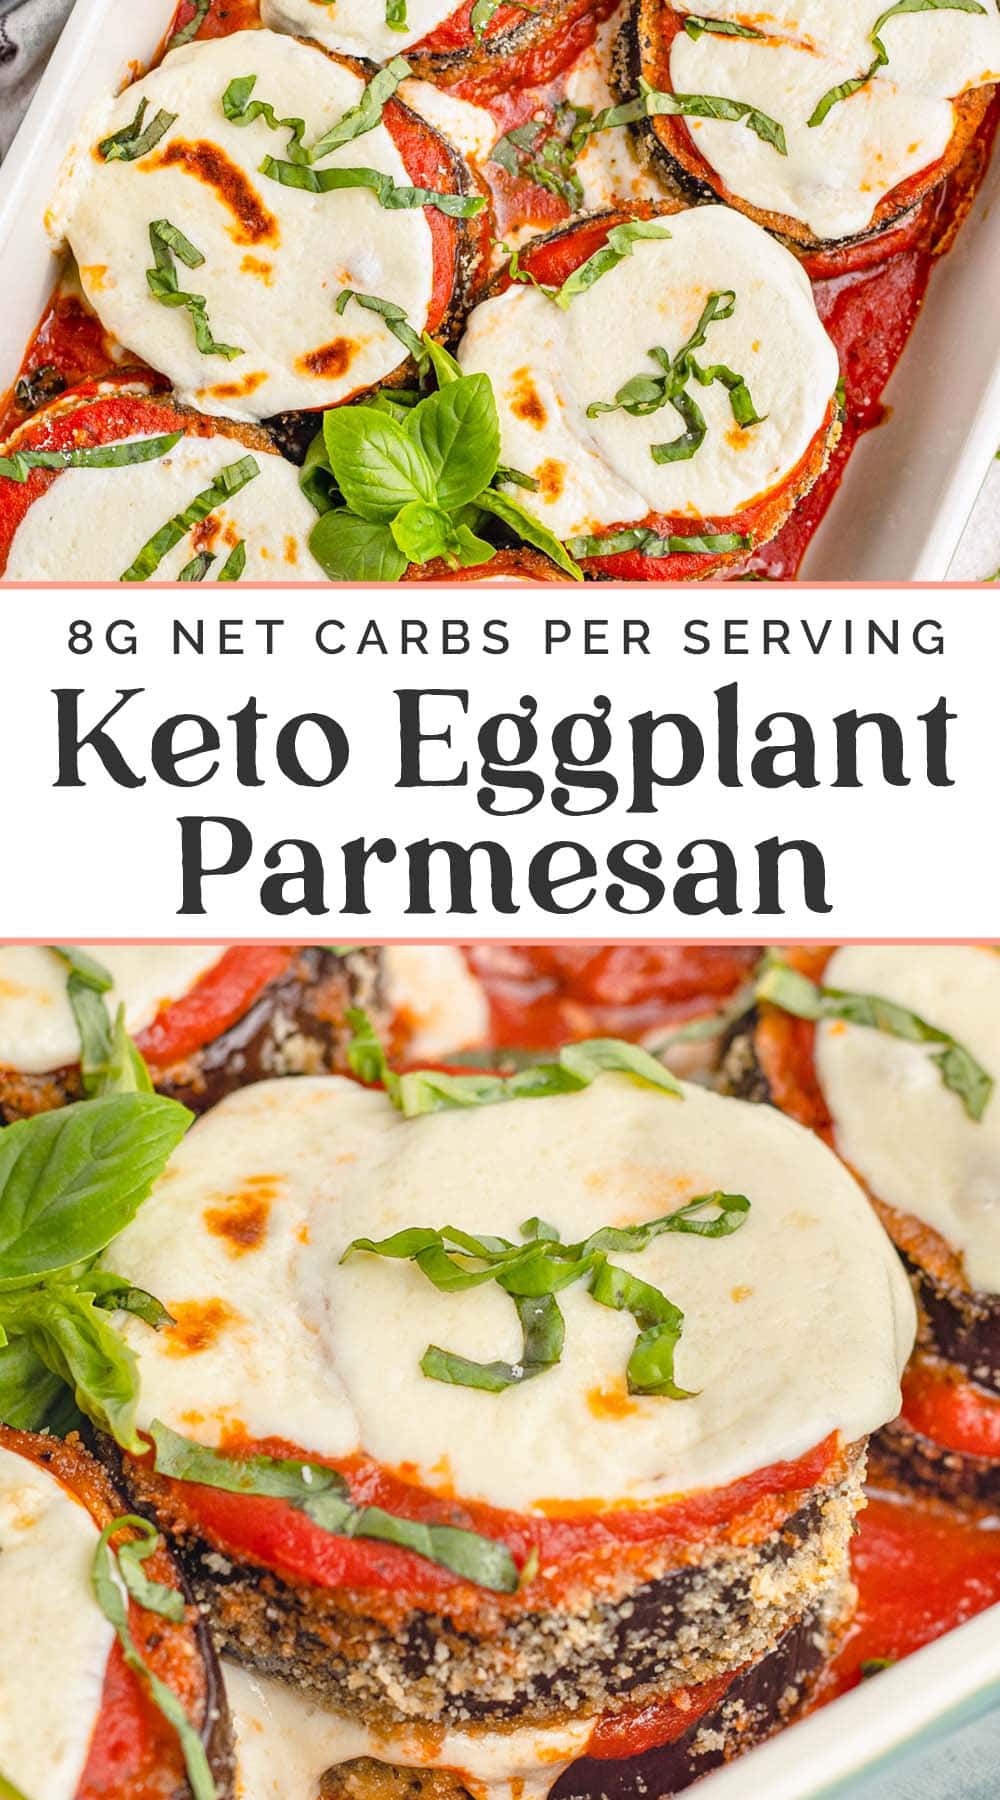 Pin graphic for keto eggplant parmesan.